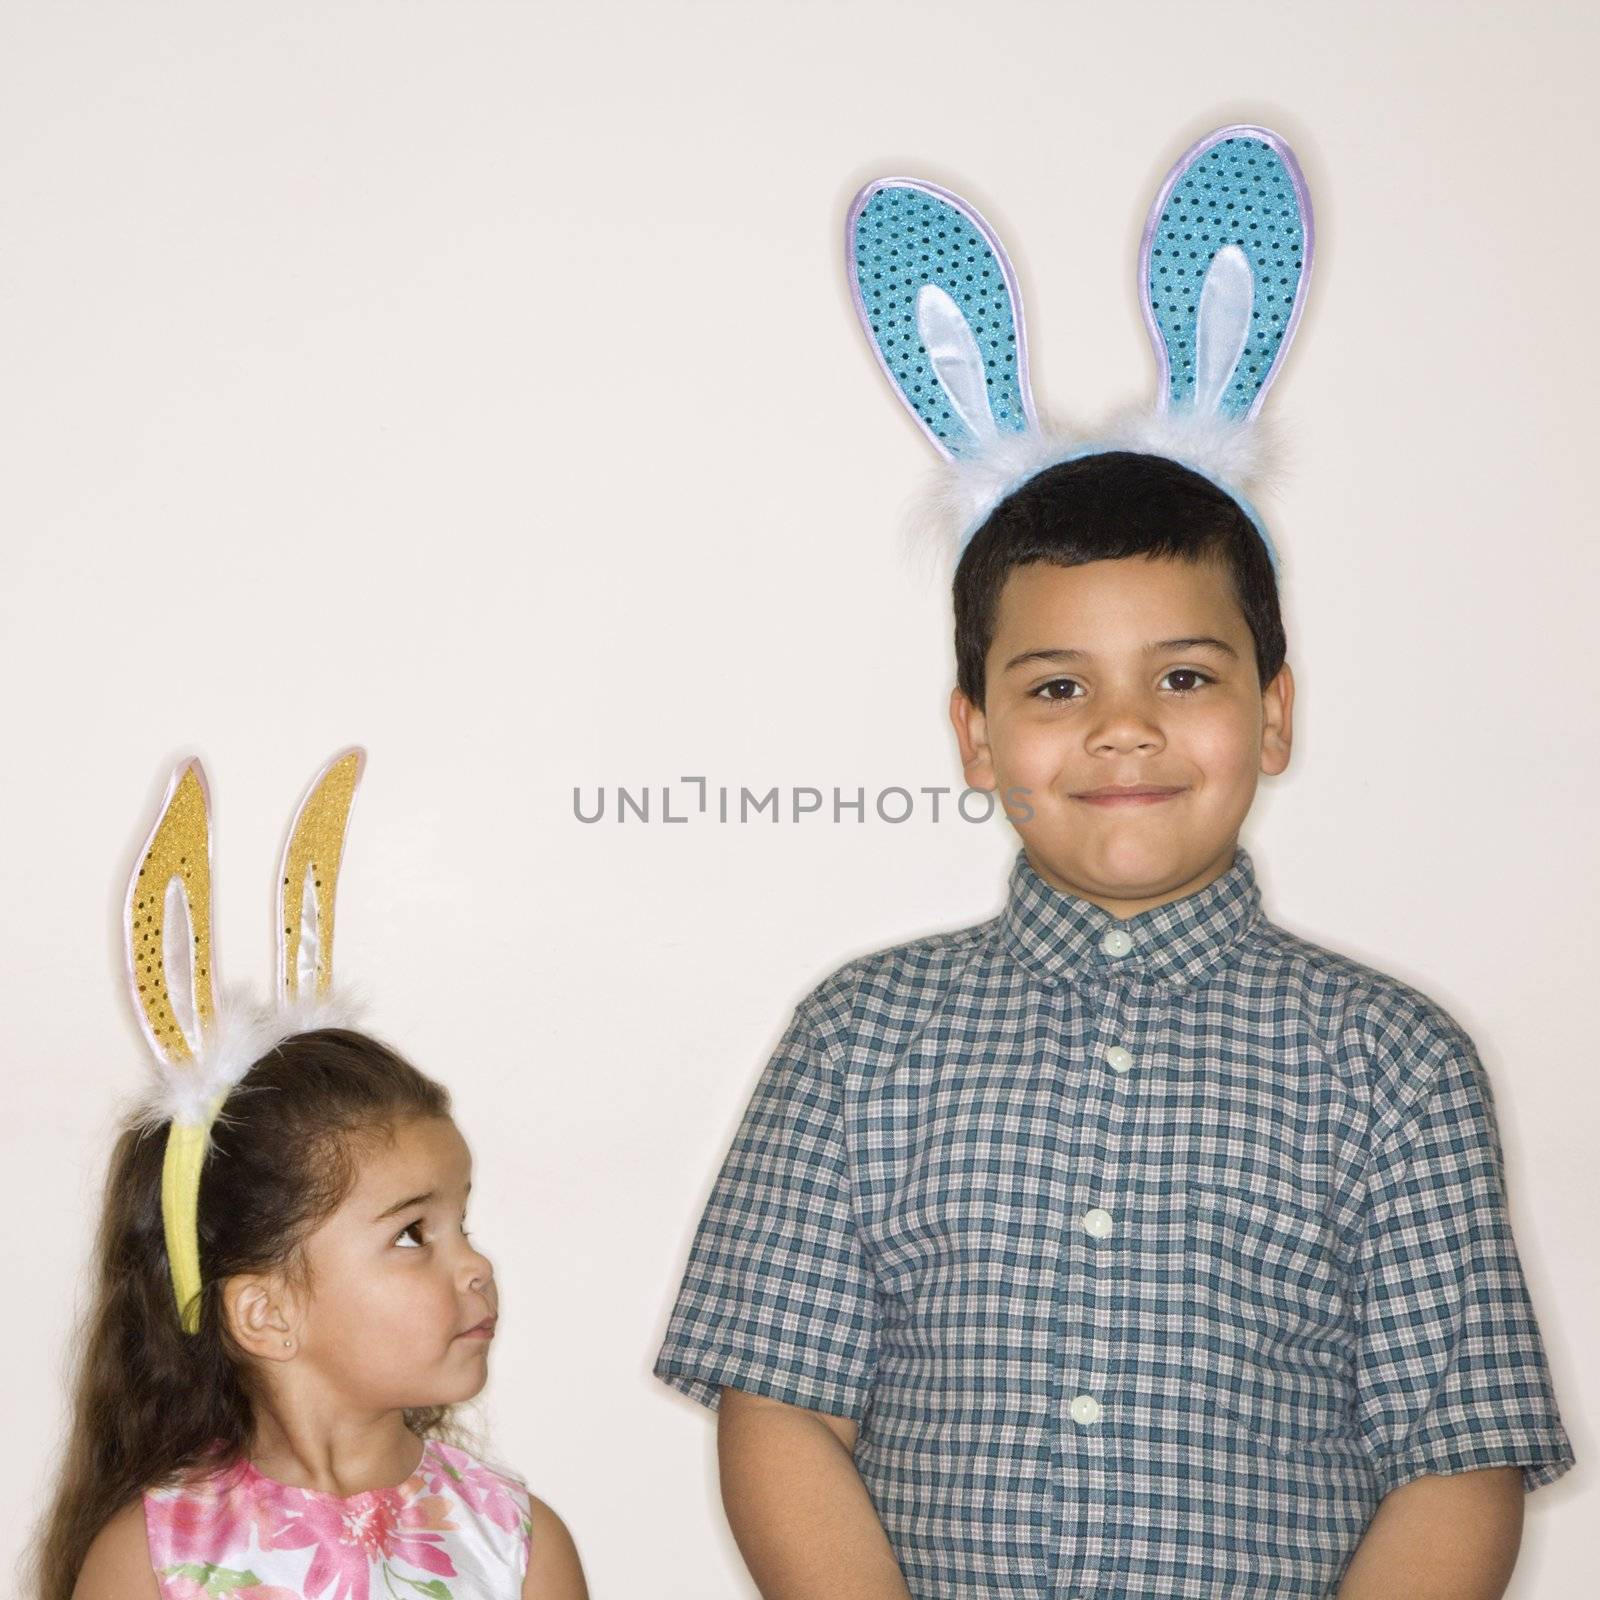 Hispanic girl looking up at Hispanic boy both wearing bunny ears.